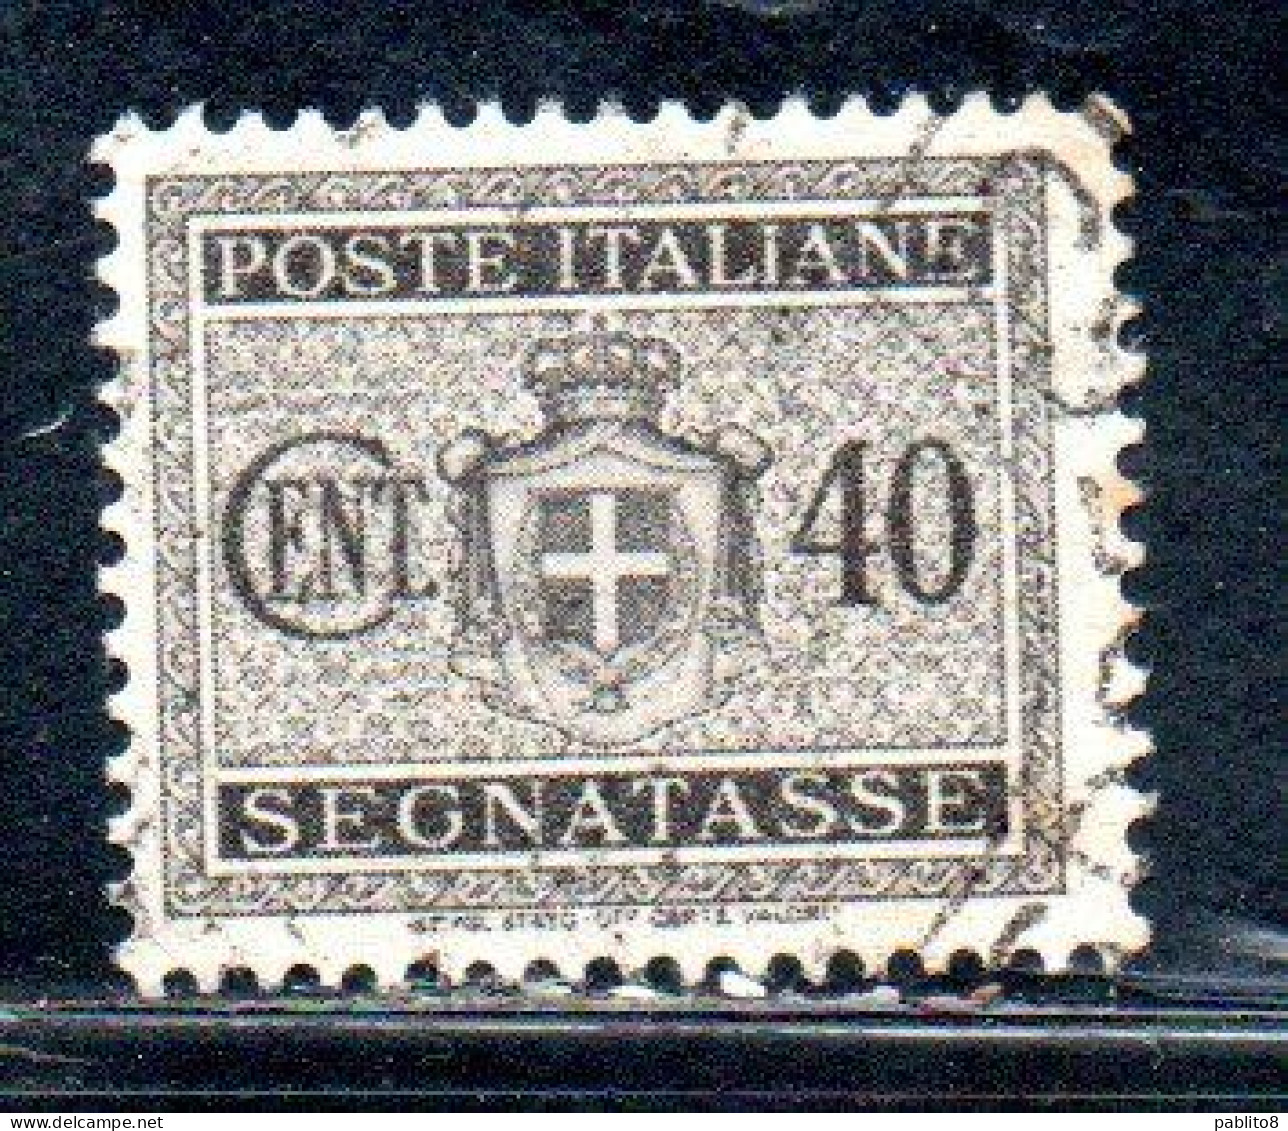 ITALY KINGDOM ITALIA REGNO LUOGOTENENZA 1945 TASSE DUE SEGNATASSE POSTAGE DUE RUOTA WHEEL CENT.40c USATO USED OBLITERE' - Segnatasse